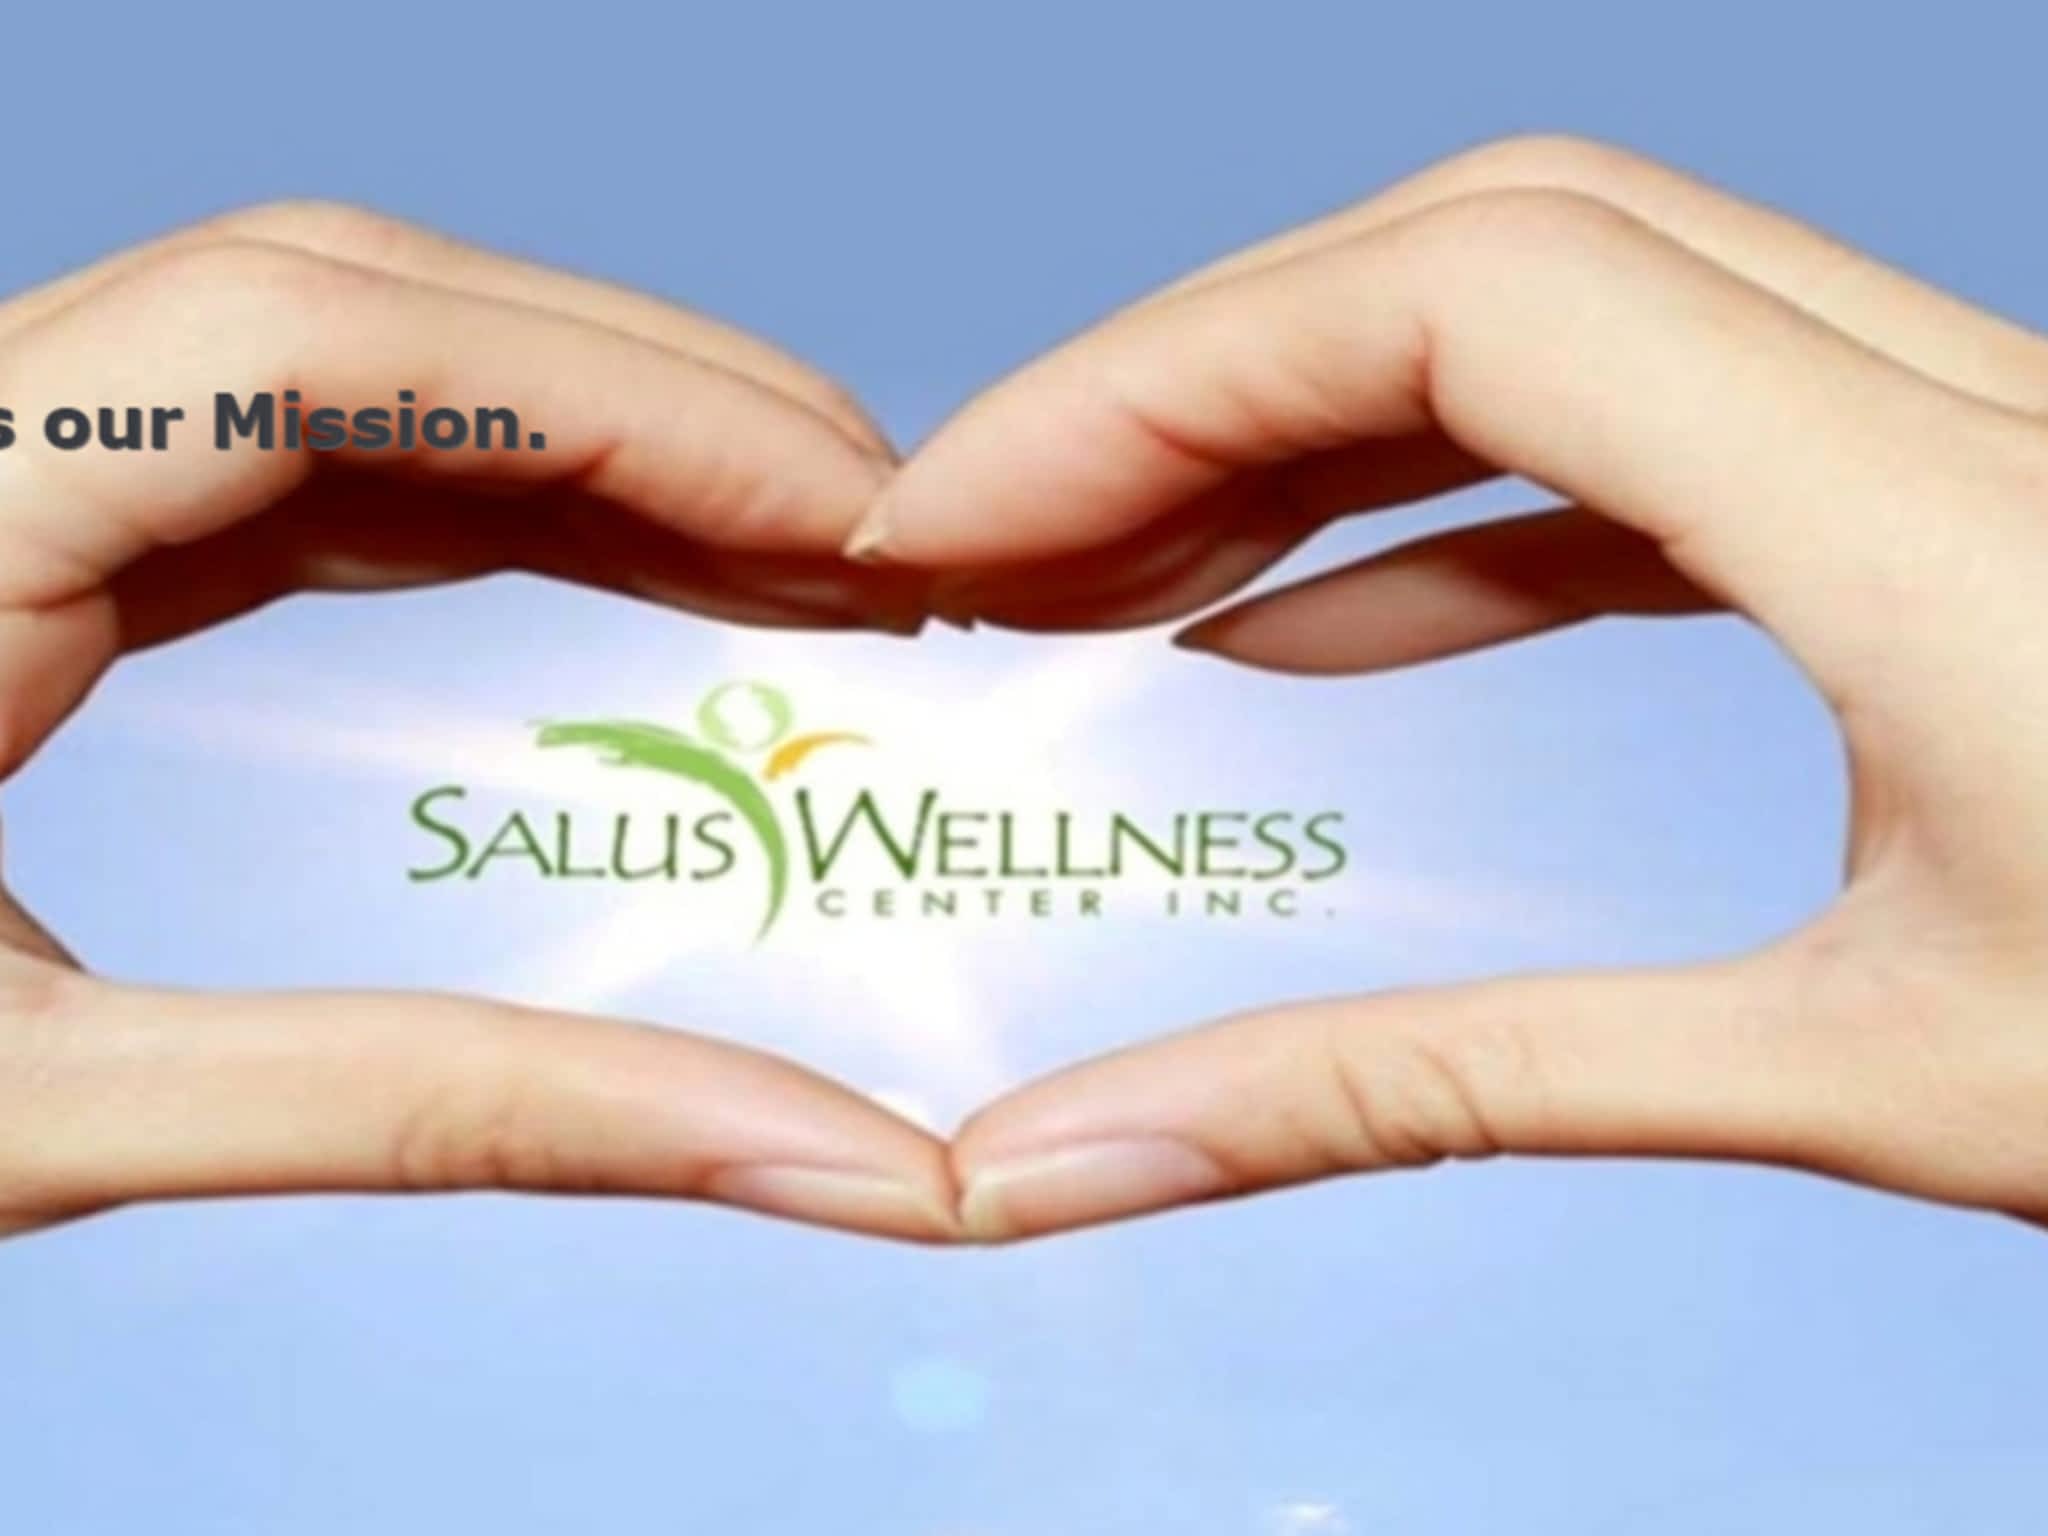 photo Salus Wellness Center Inc